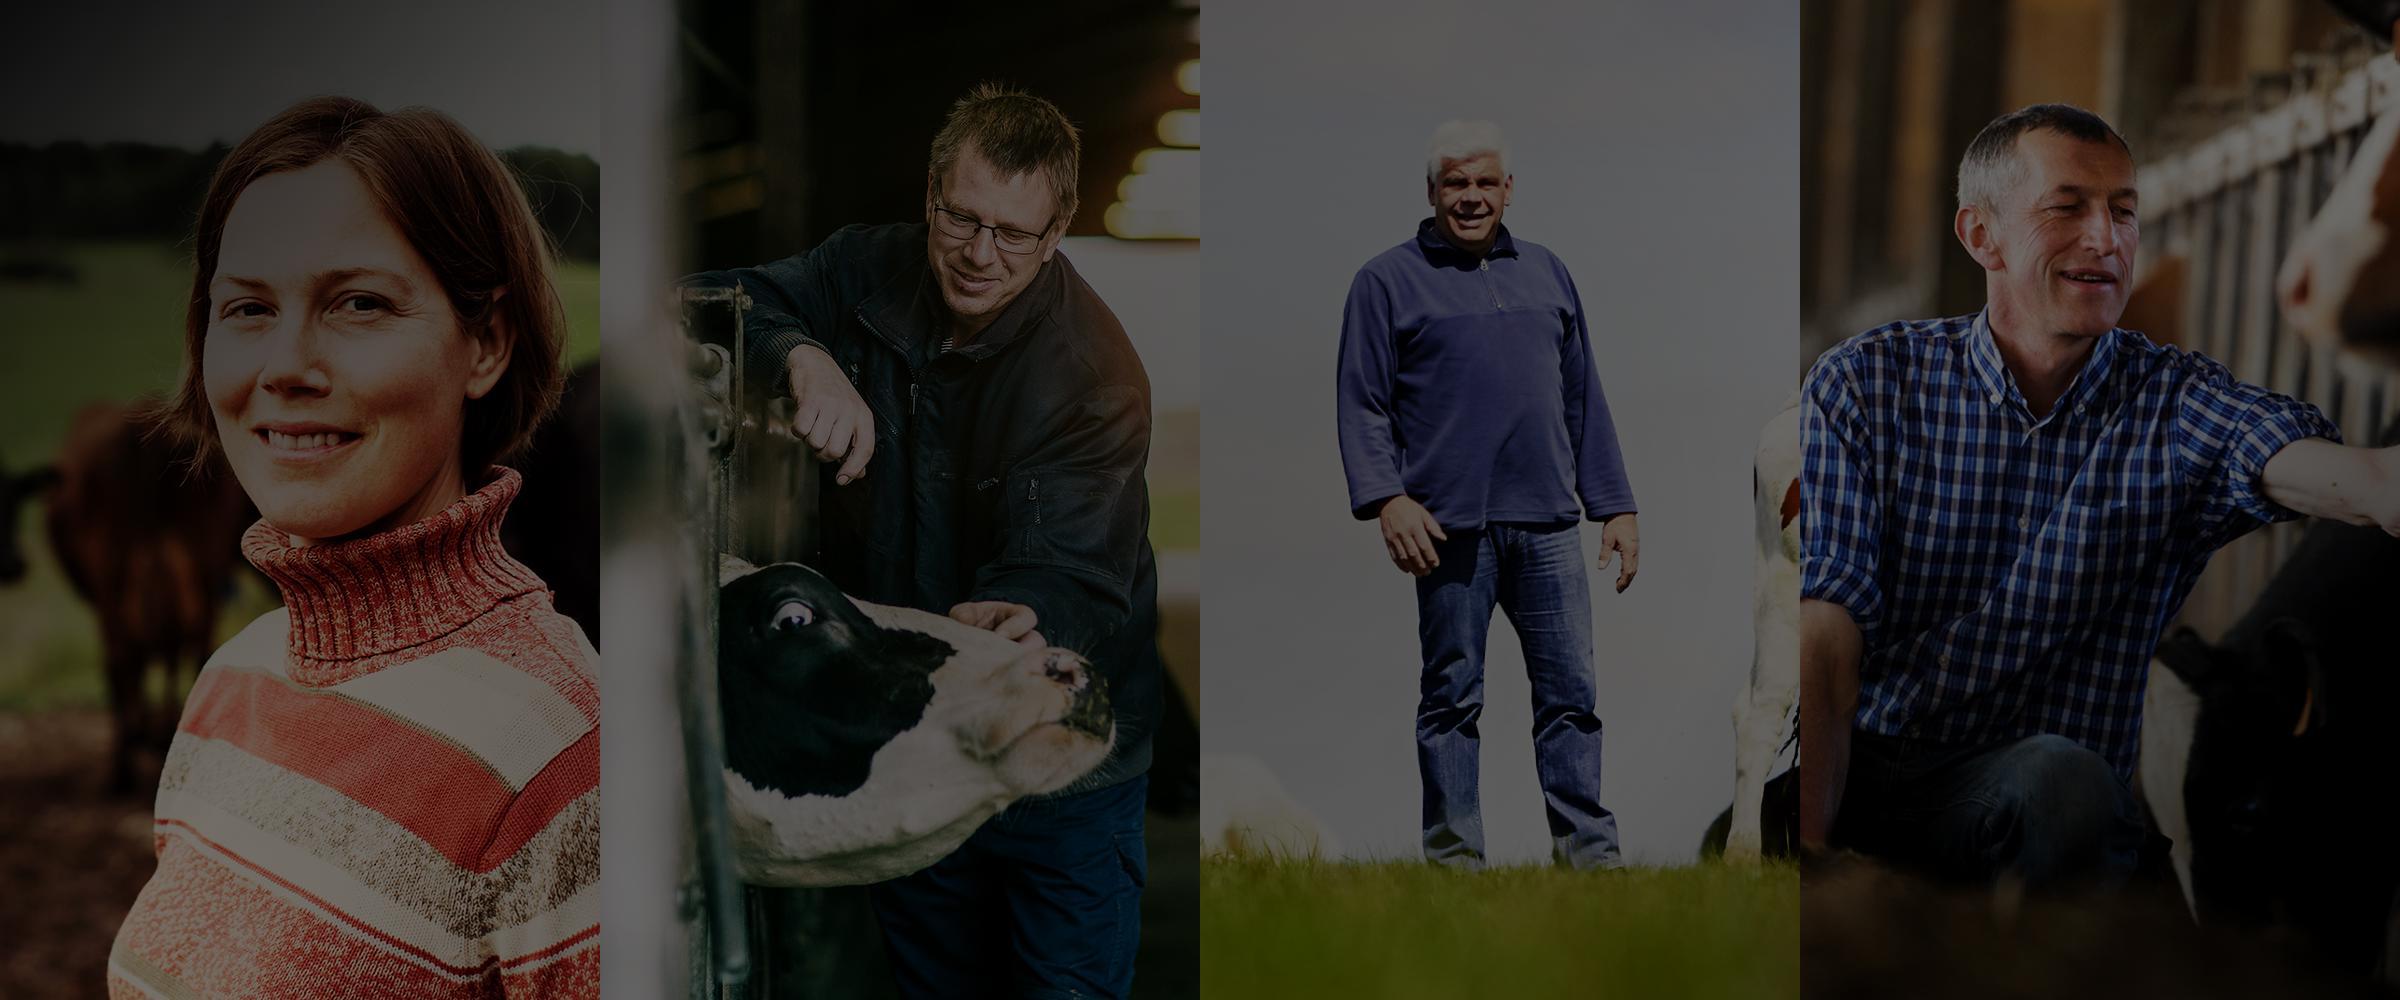 Composite of 4 farmers portraits